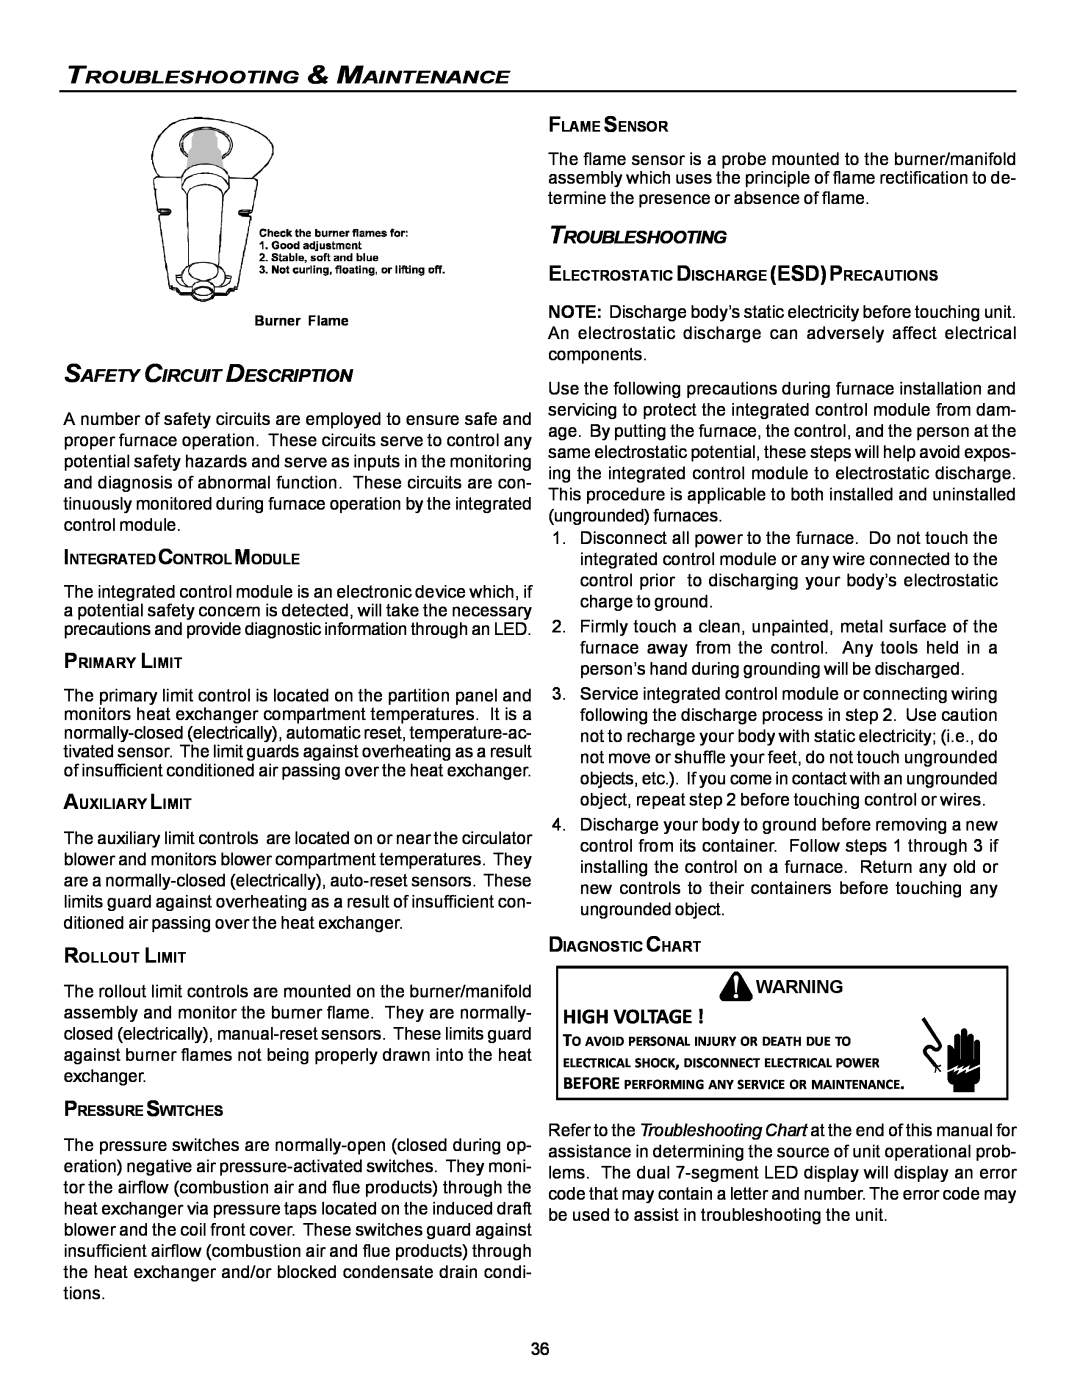 Goodman Mfg VC8 instruction manual High Voltage, Troubleshooting & Maintenance, Safety Circuit Description 